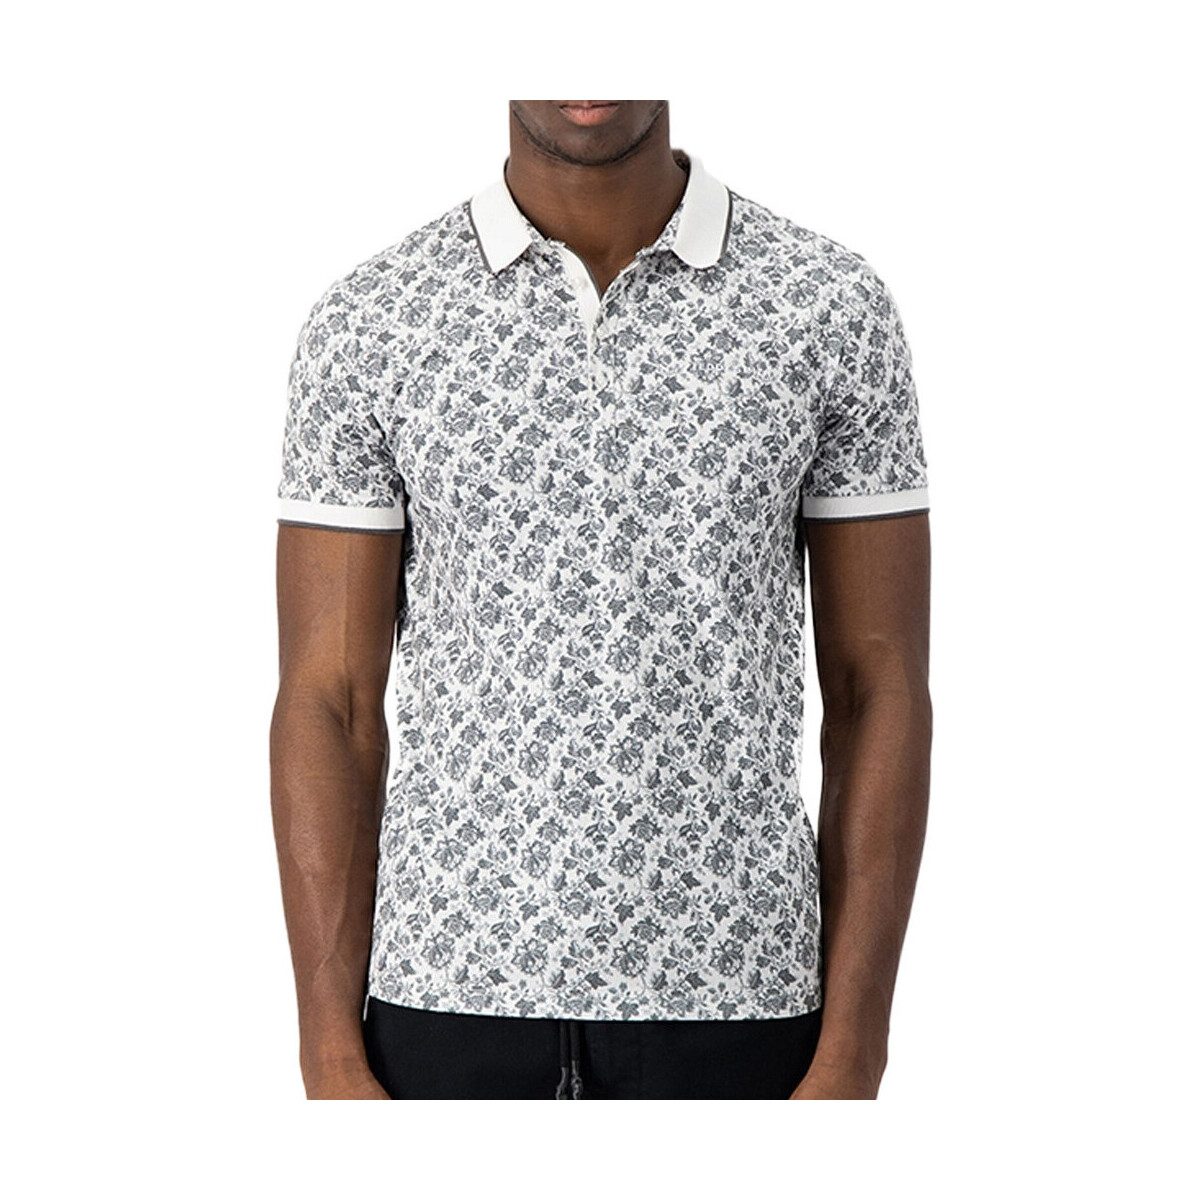 Vêtements Homme Calvin Klein Confezione da 3 T-shirt nera bianca e grigia Teddy Smith 11315269D Blanc